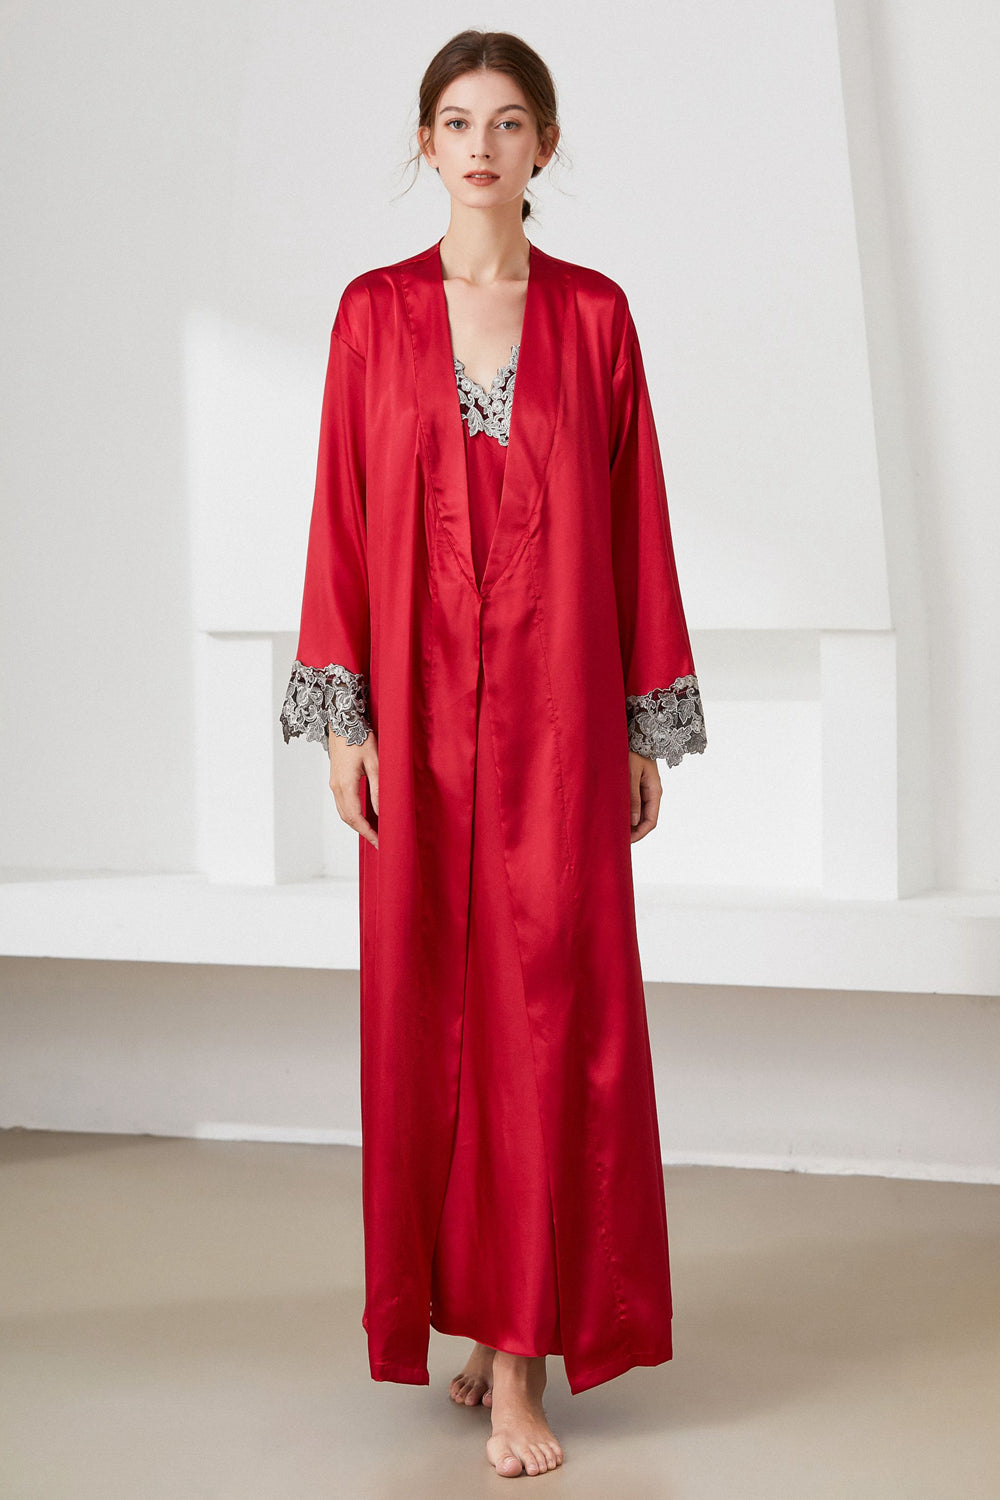 Satin Night Dress & Kimono Robe Set Sizes M/LG/XL See Colors